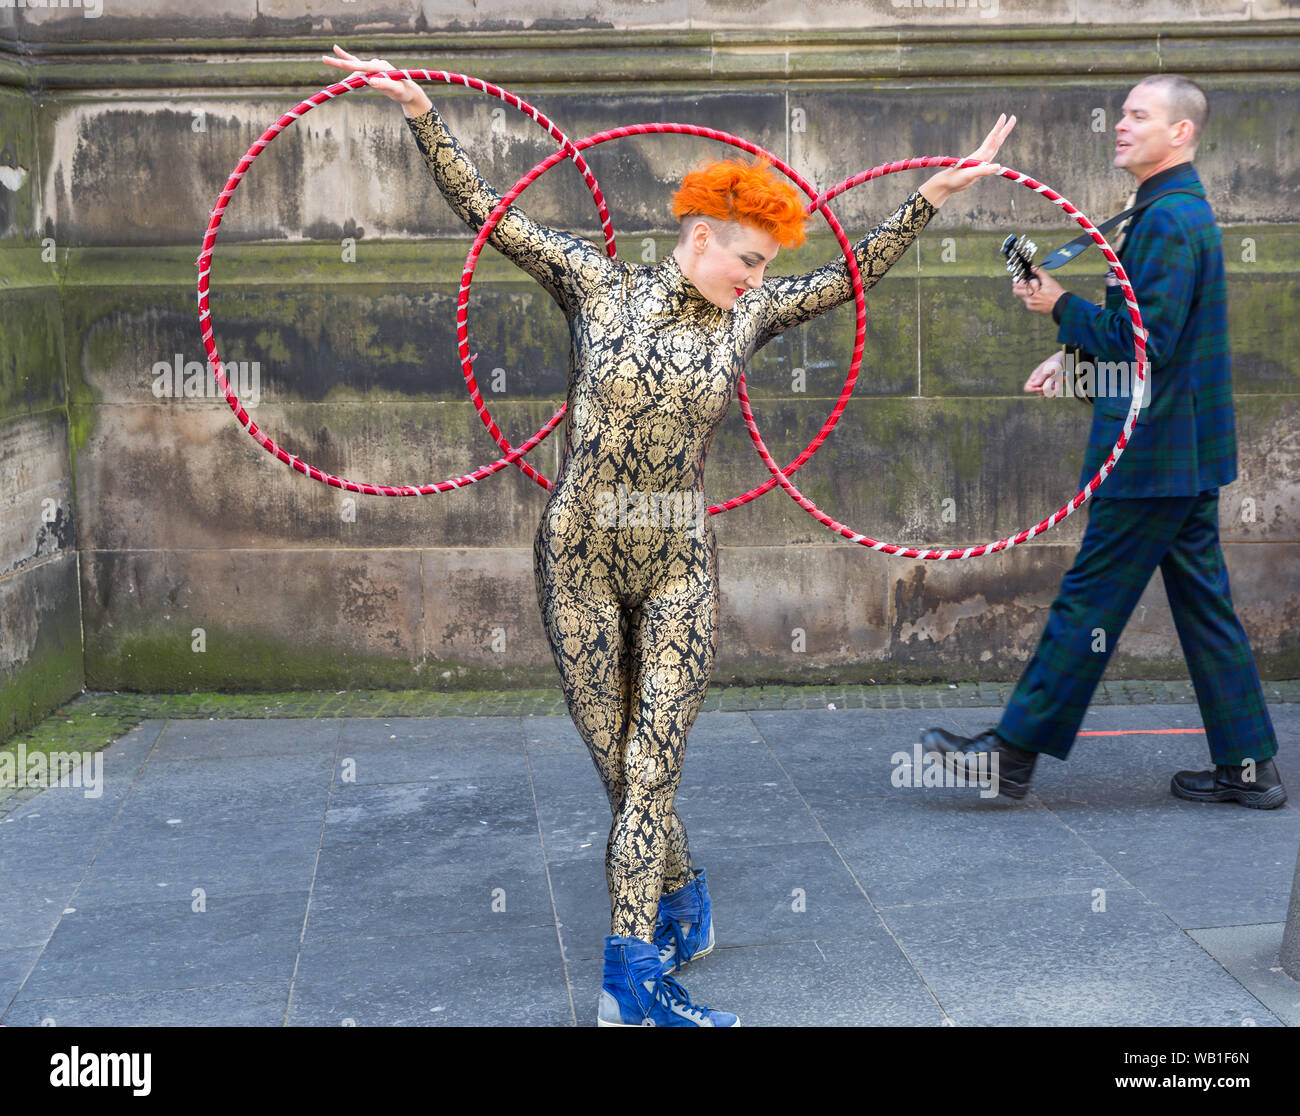 A street performer doing gymnastic dance with hoola hoops at the Edinburgh Festival Fringe 2019 Stock Photo